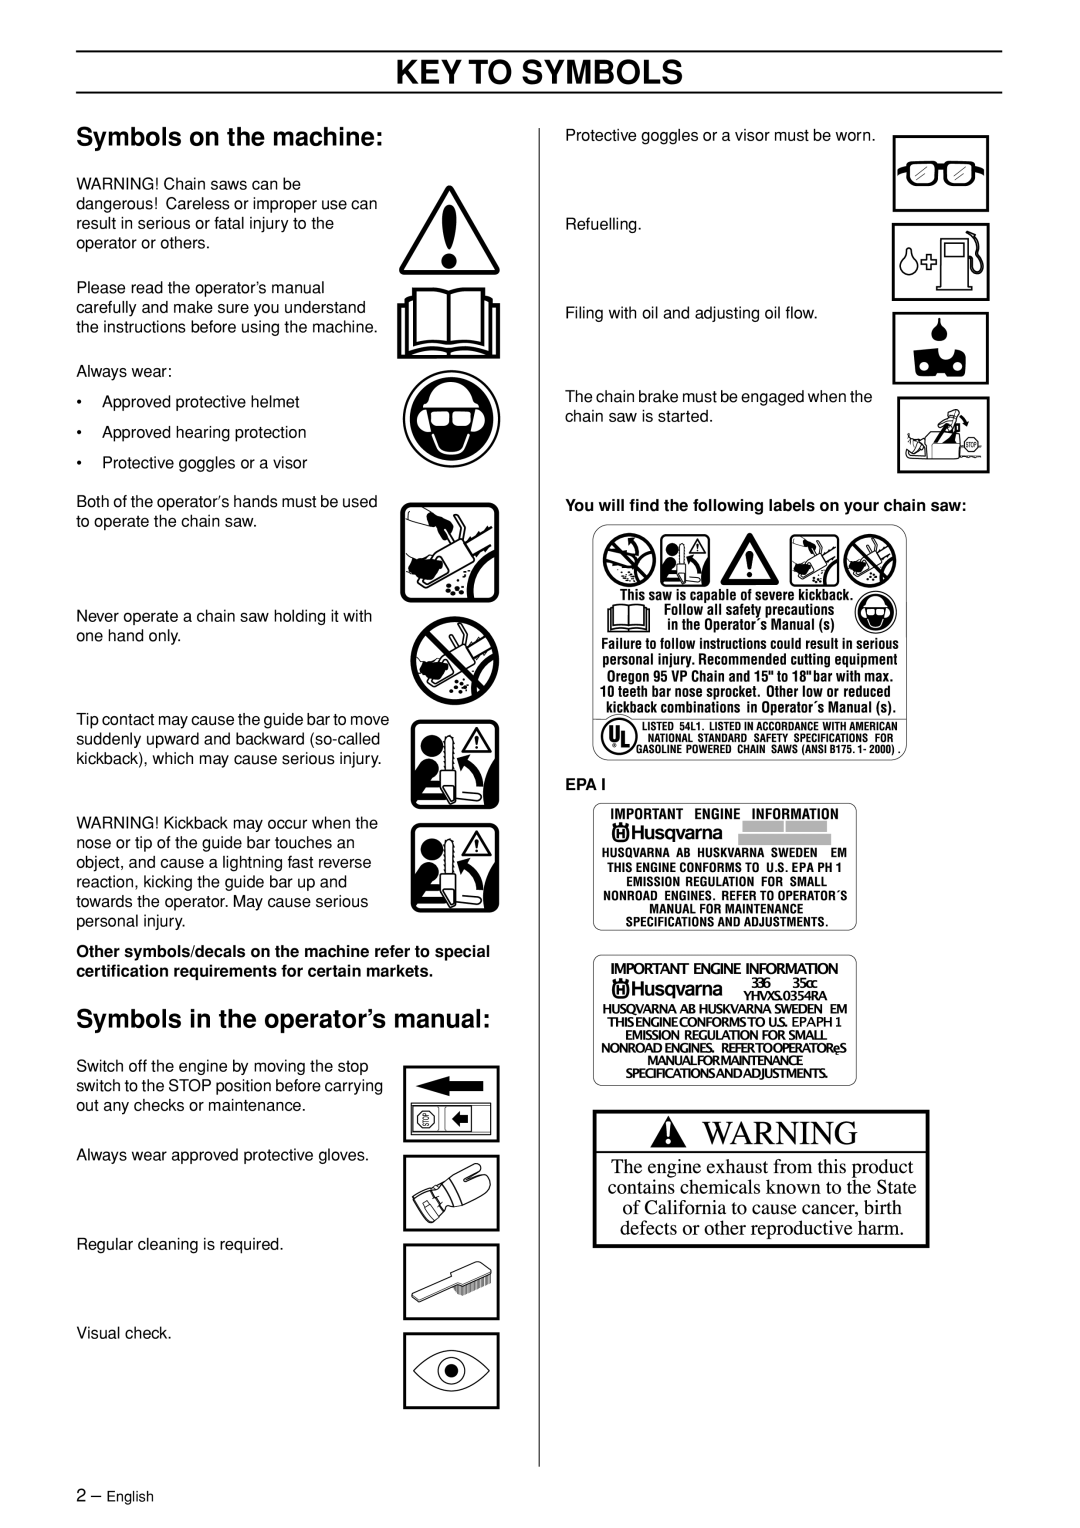 Husqvarna 336 EPA I Key To Symbols, Symbols on the machine, Symbols in the operator’s manual 